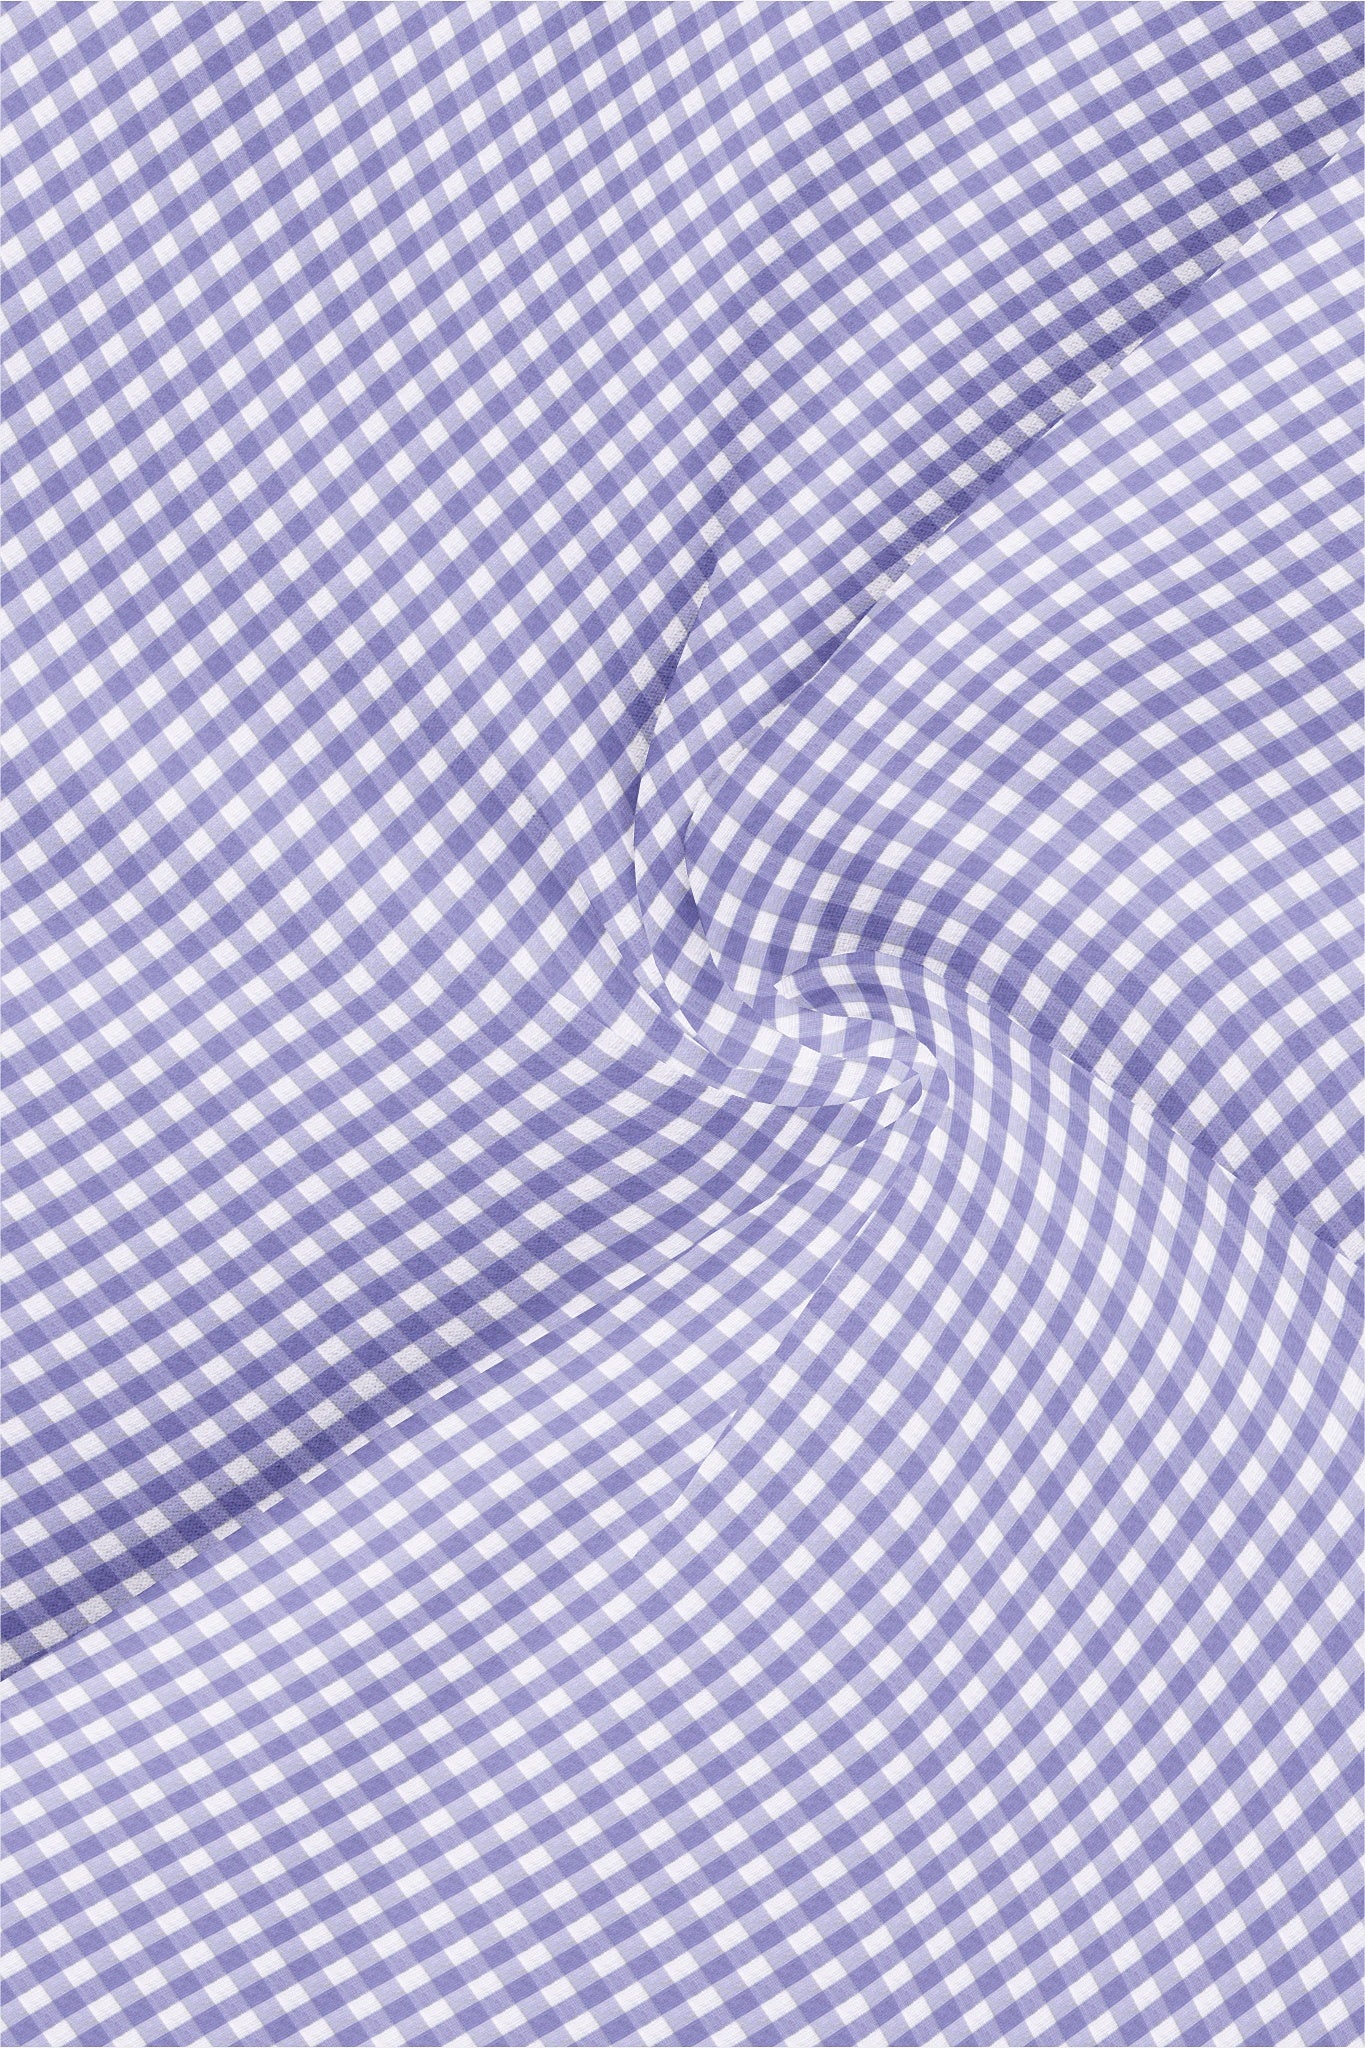 White with Lavender Purple Gingham Checks Designer Cotton Shirt